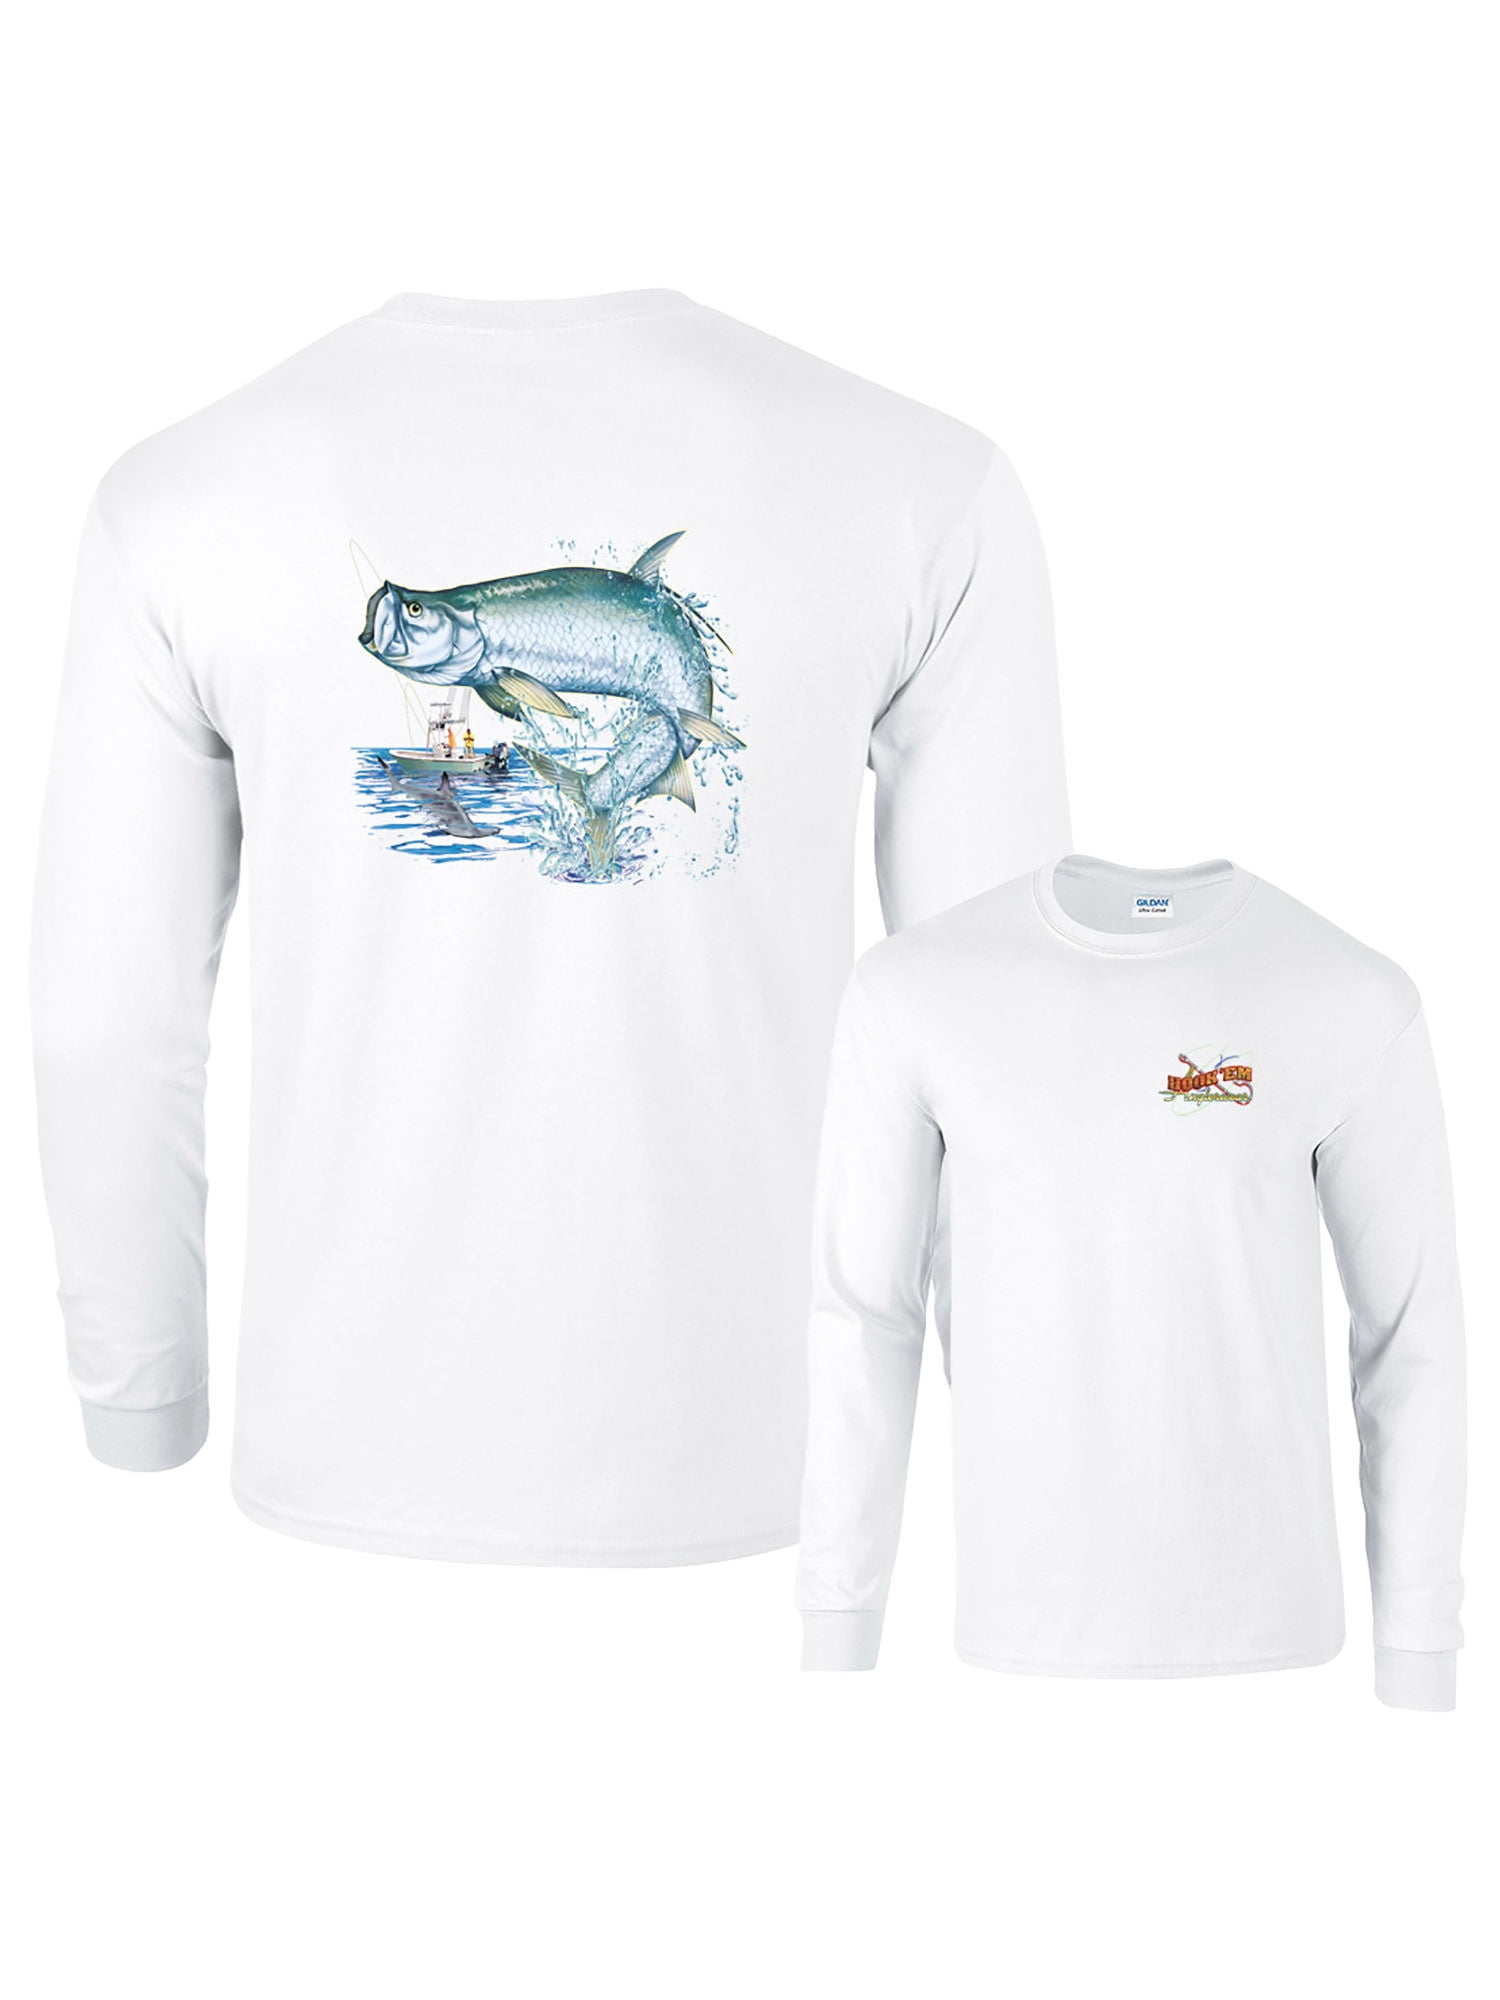 Fair Game - Tarpon Fish Fishing Long Sleeve T-Shirt - Walmart.com ...